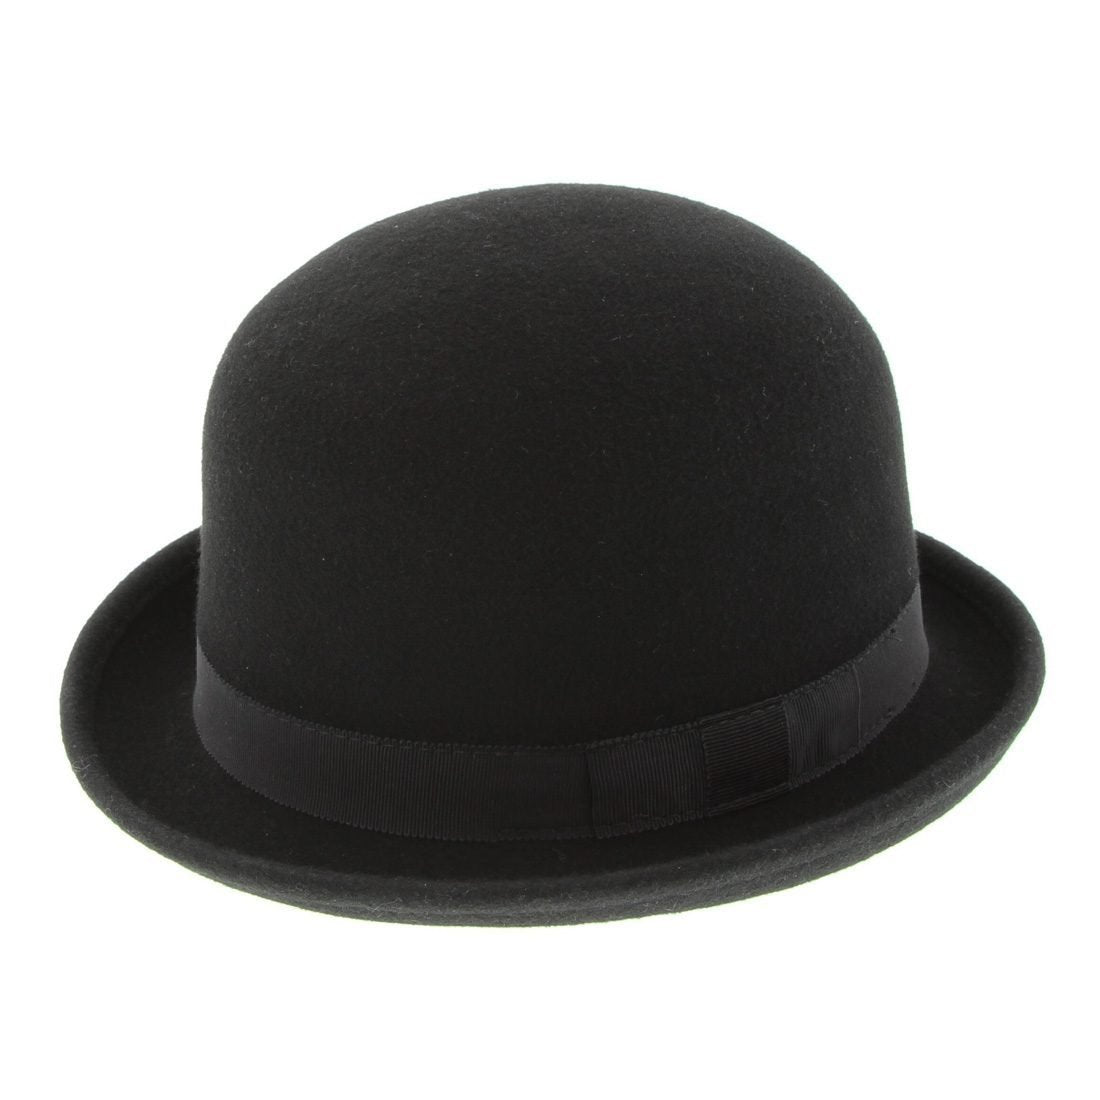 Melbourne Hats Bowler Hat - Black